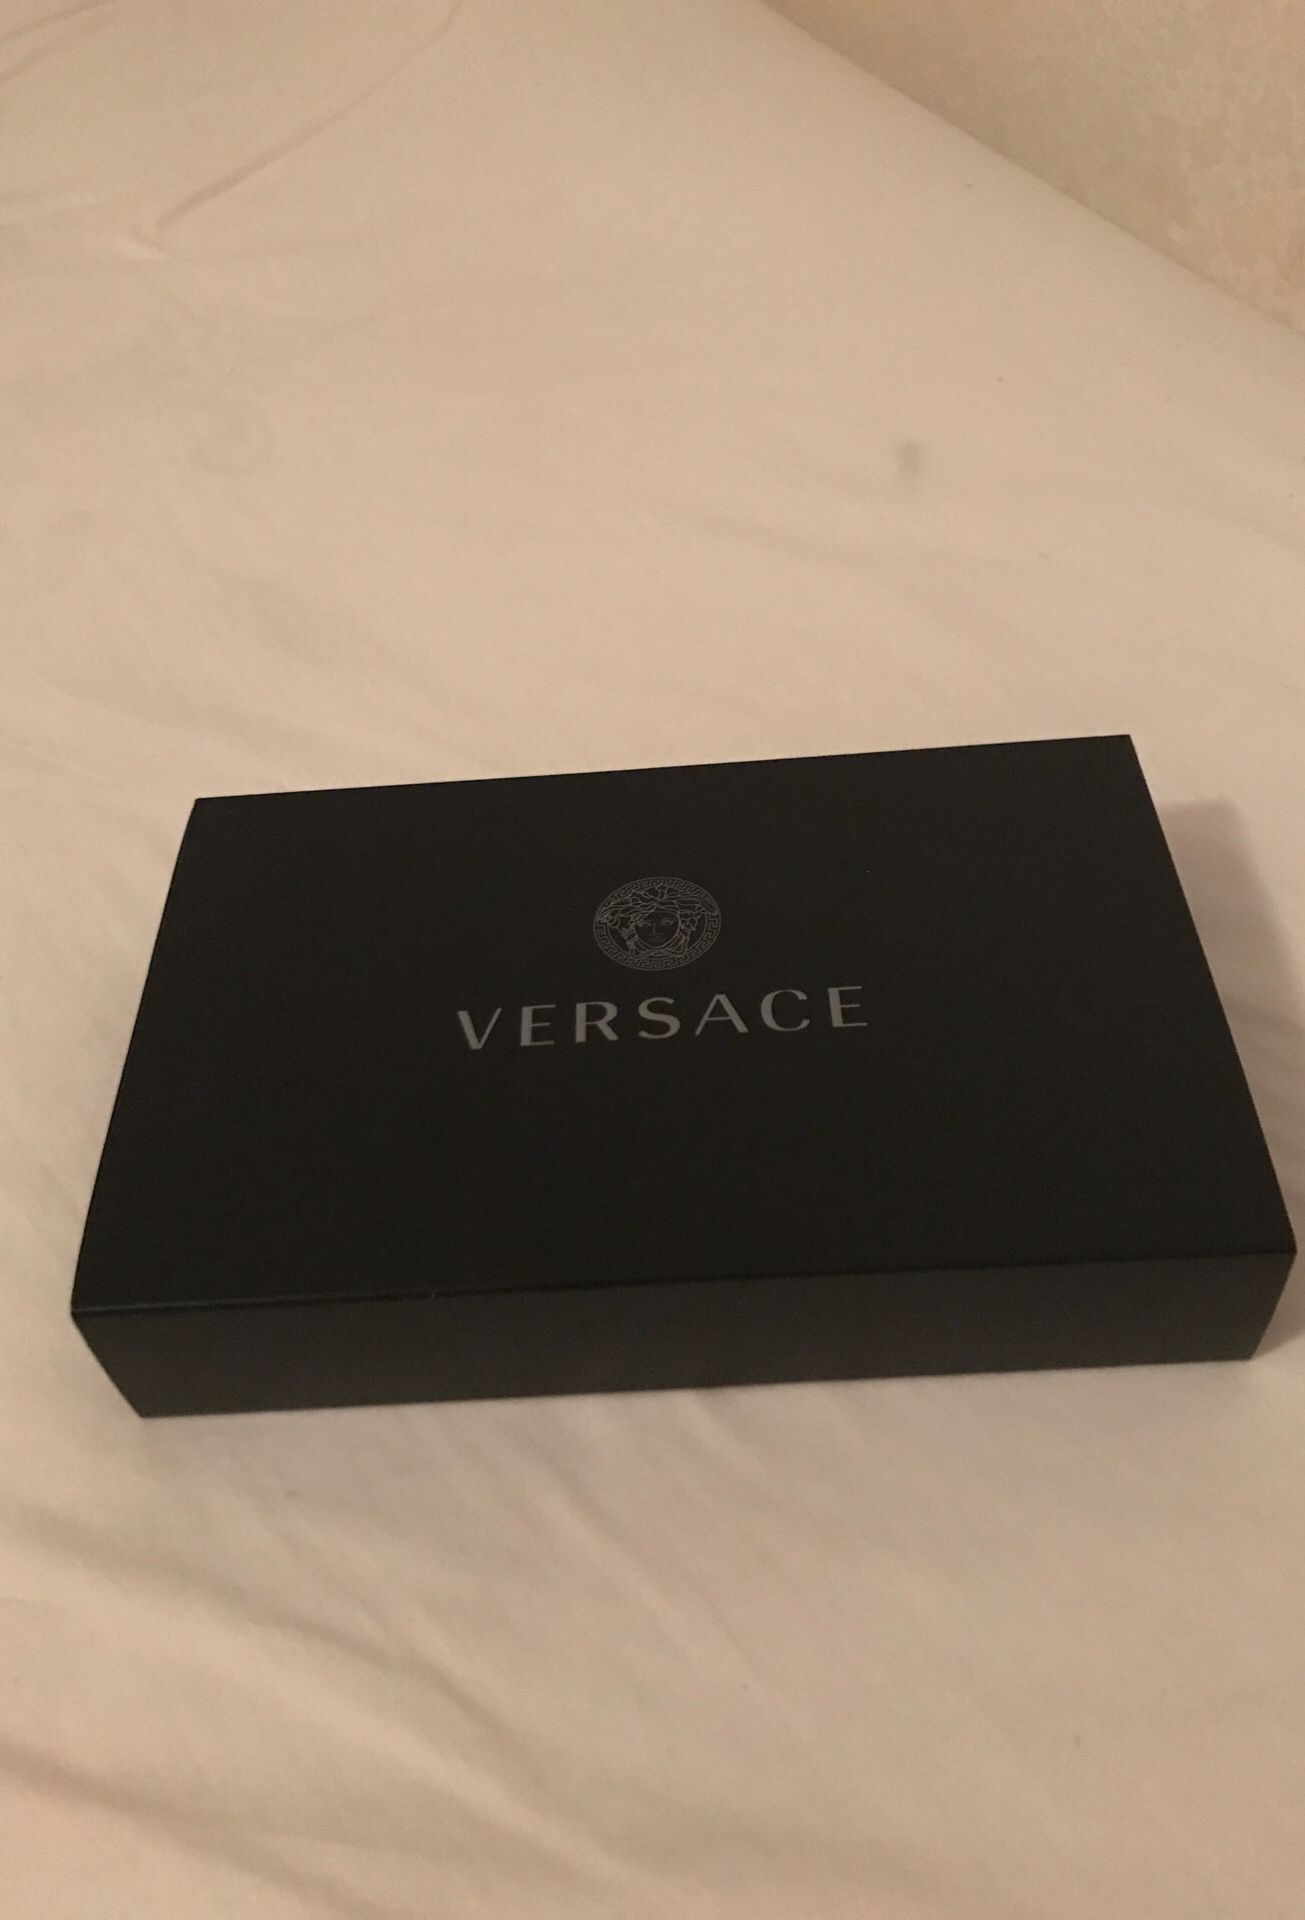 4 Pc Versace men’s fragrance